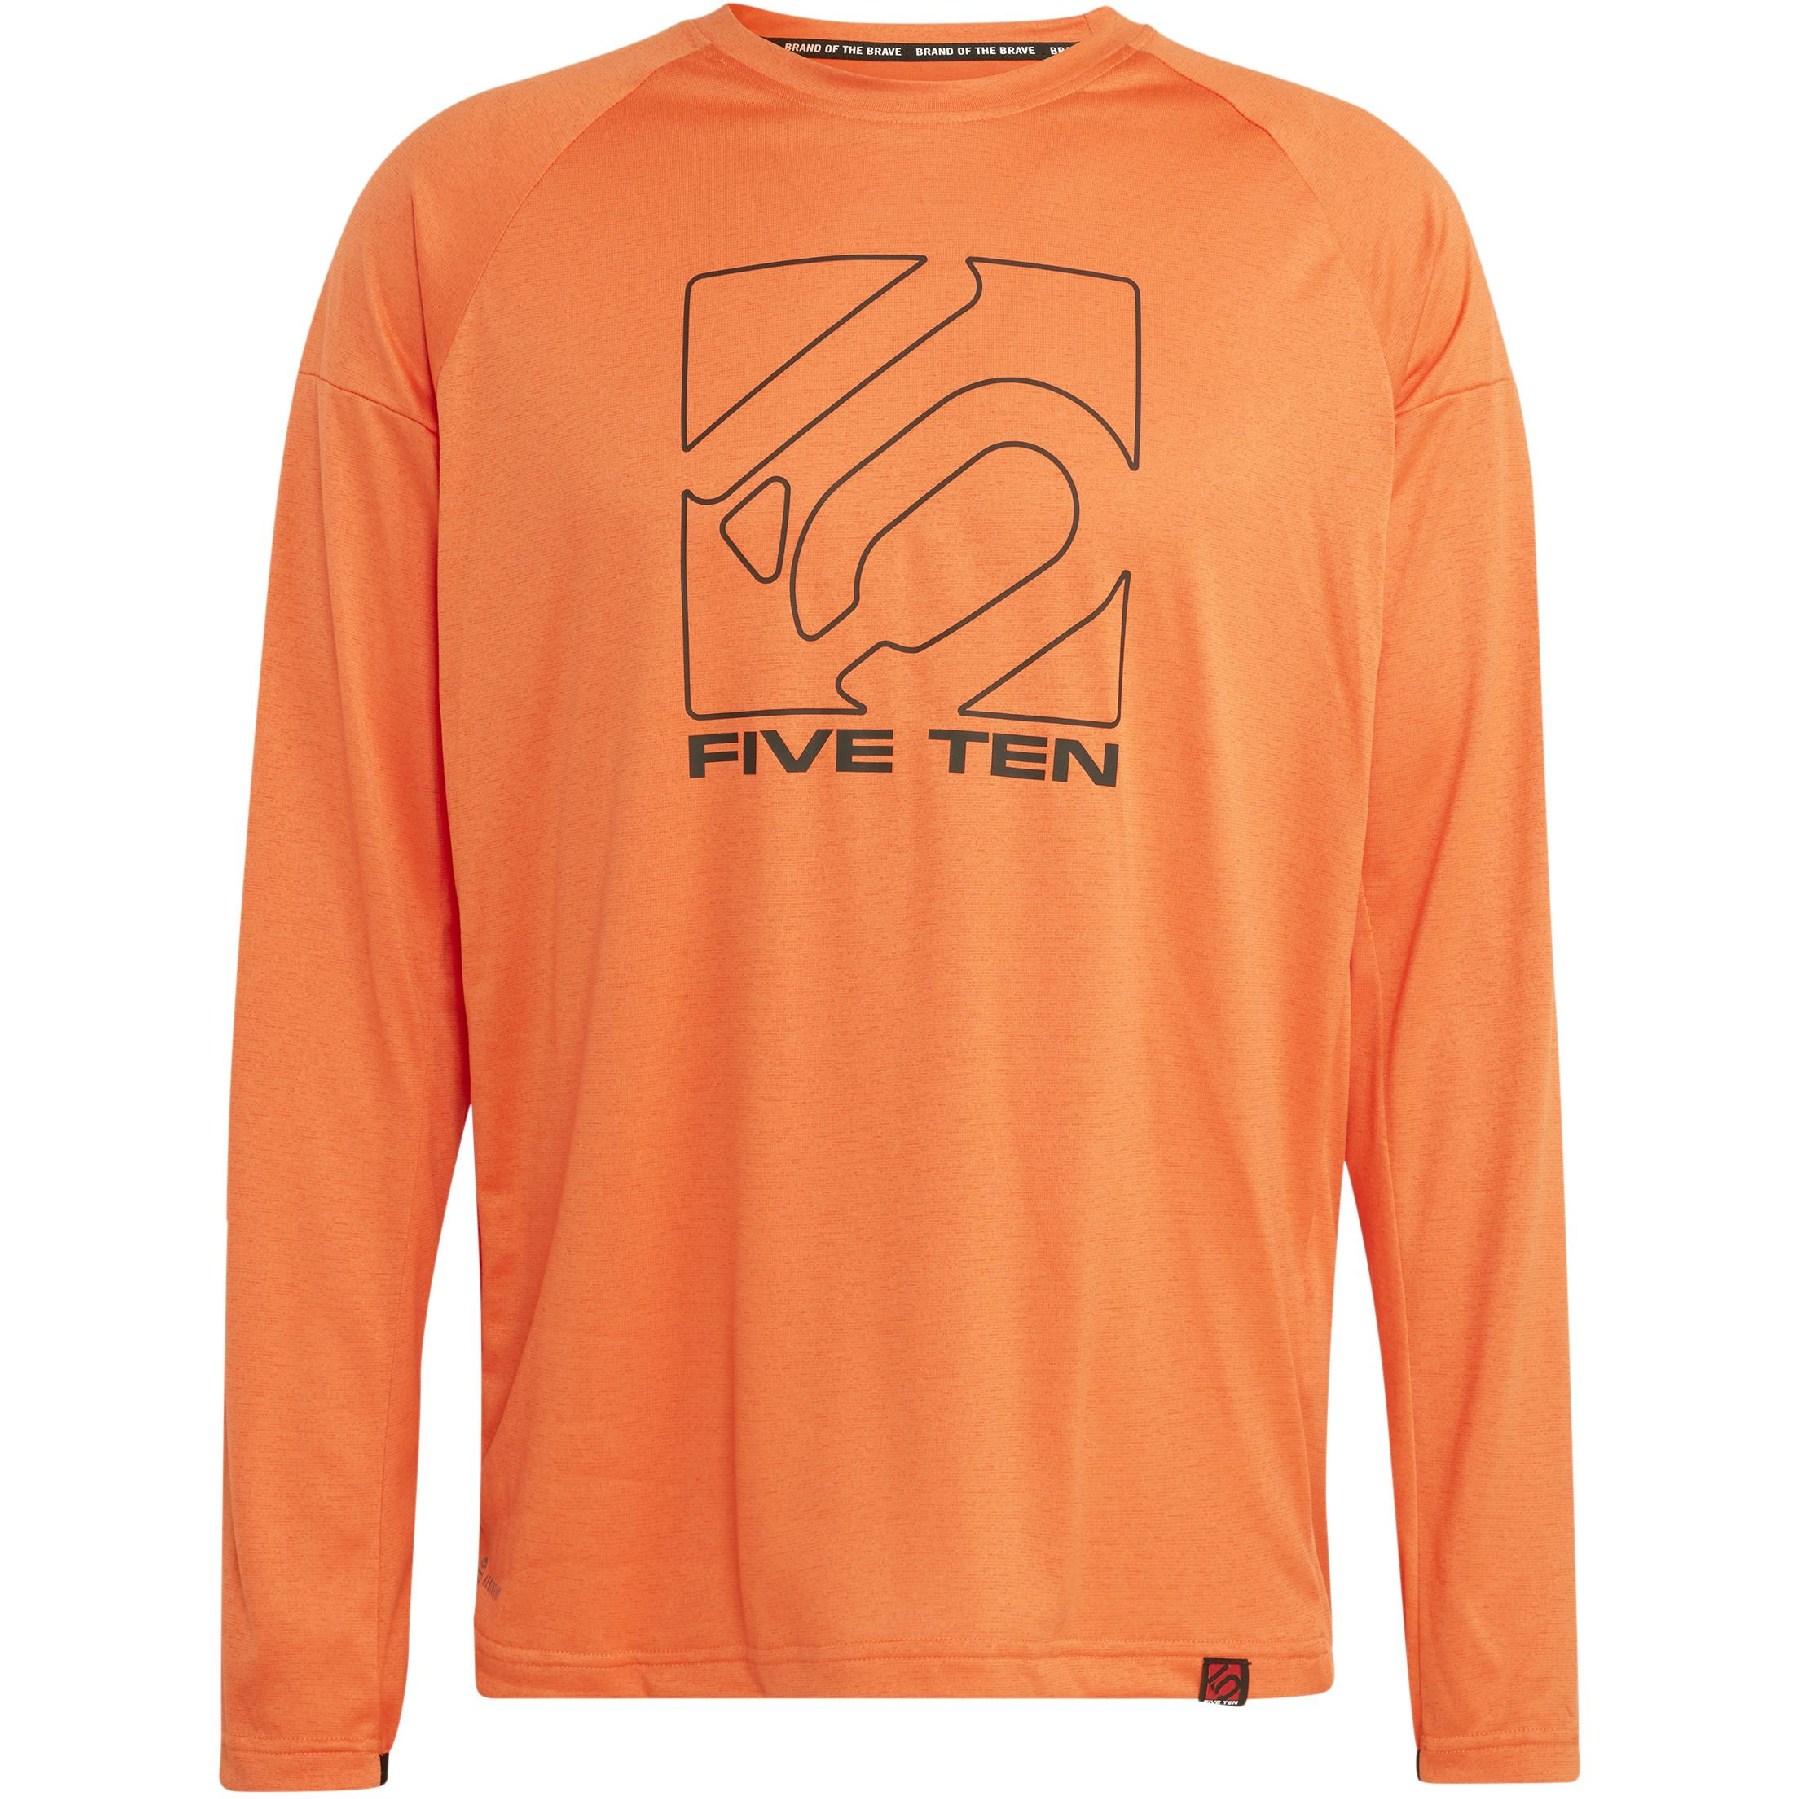 Picture of Five Ten Long Sleeve Jersey - Semi Impact Orange